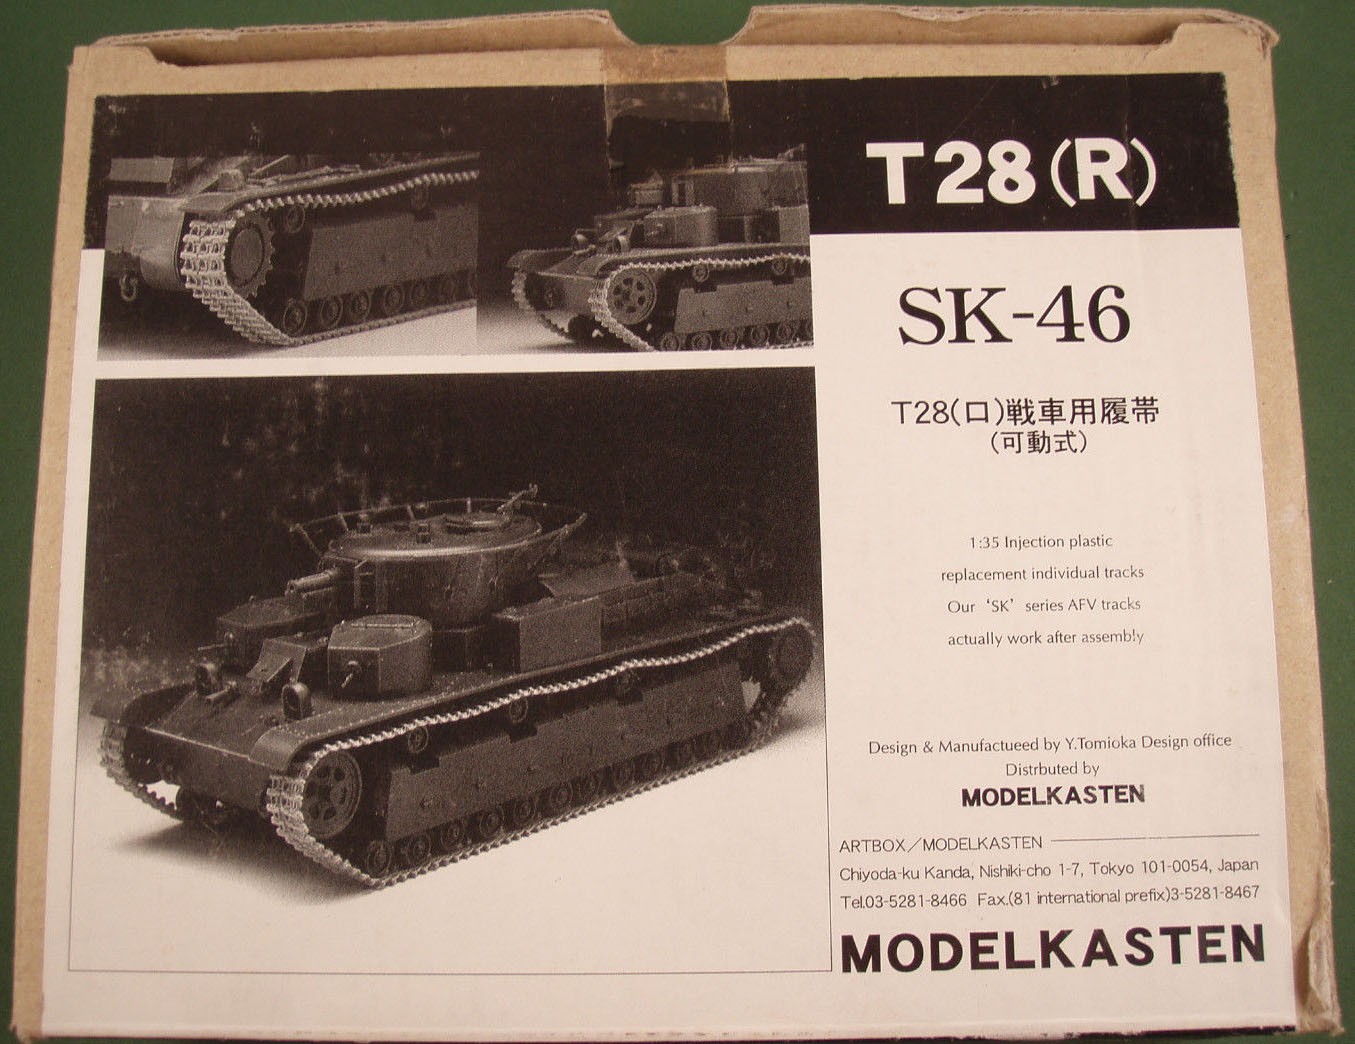 SK-46 T28(R) Image